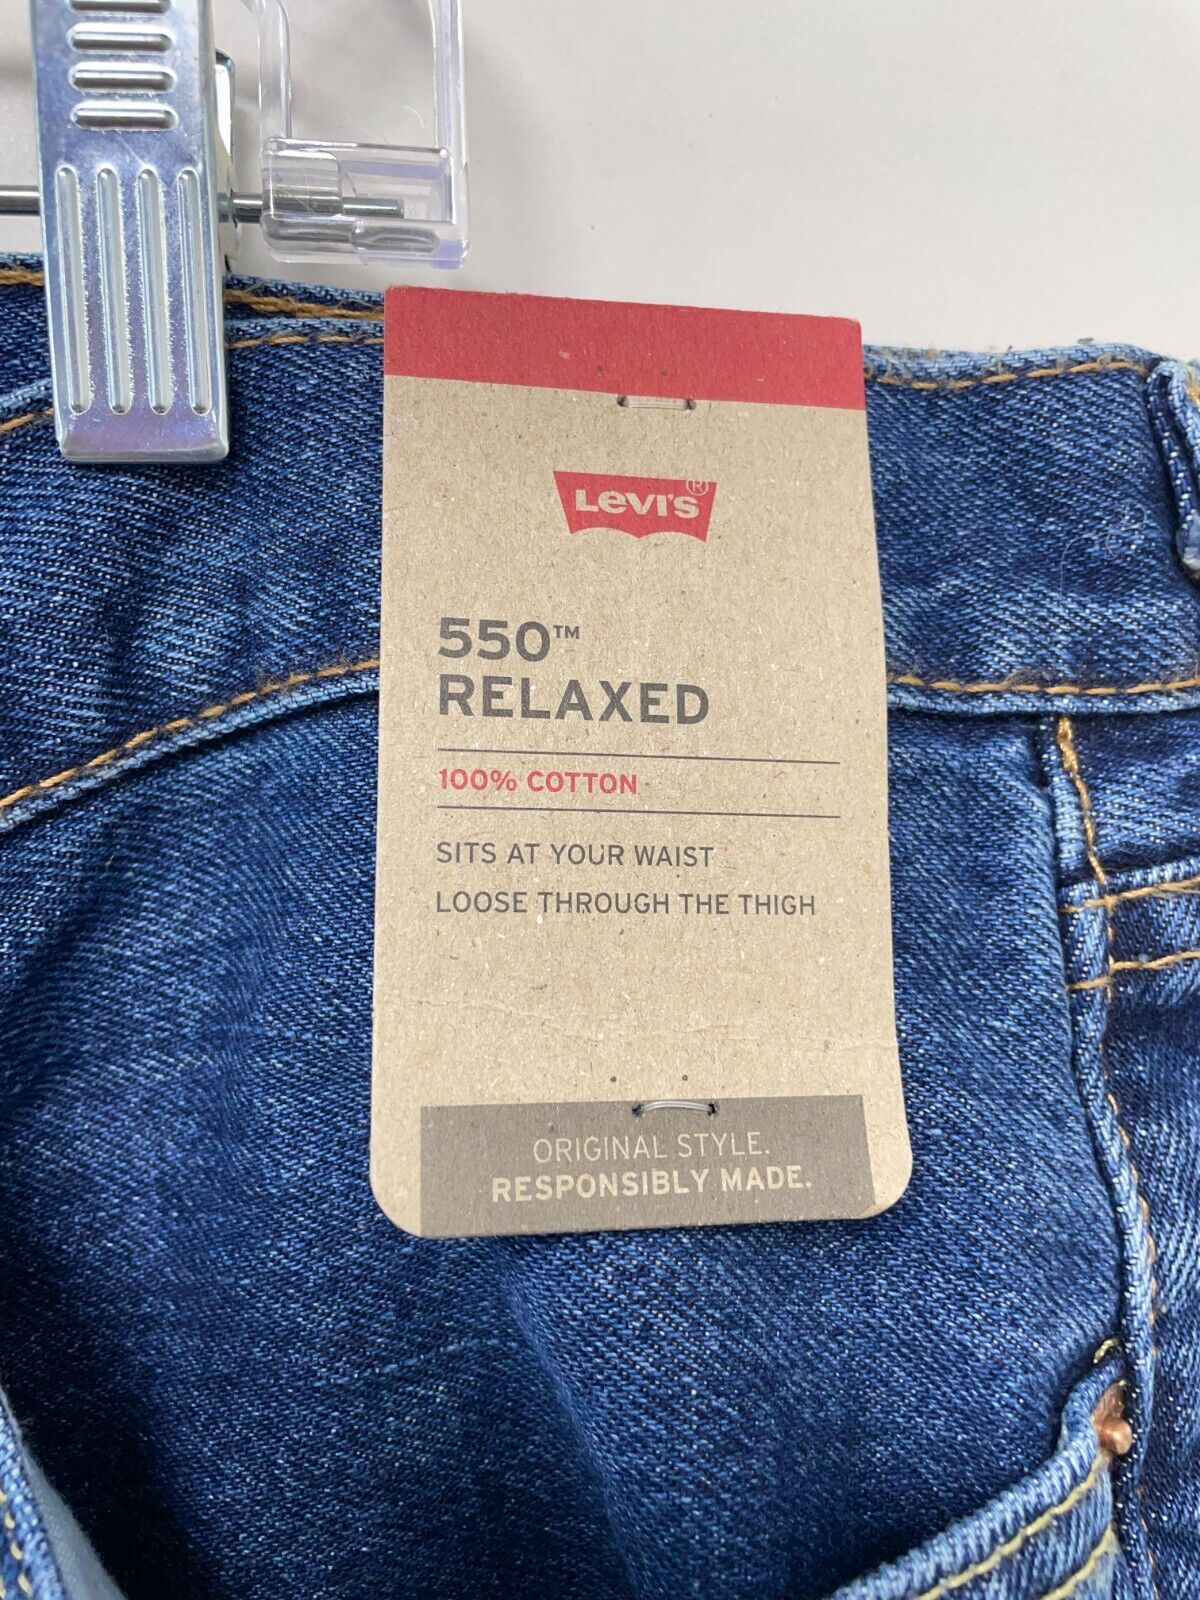 Levi's 550 Mens 42x30 Relaxed Fit Jeans Dark Stonewash Tapered Leg Denim